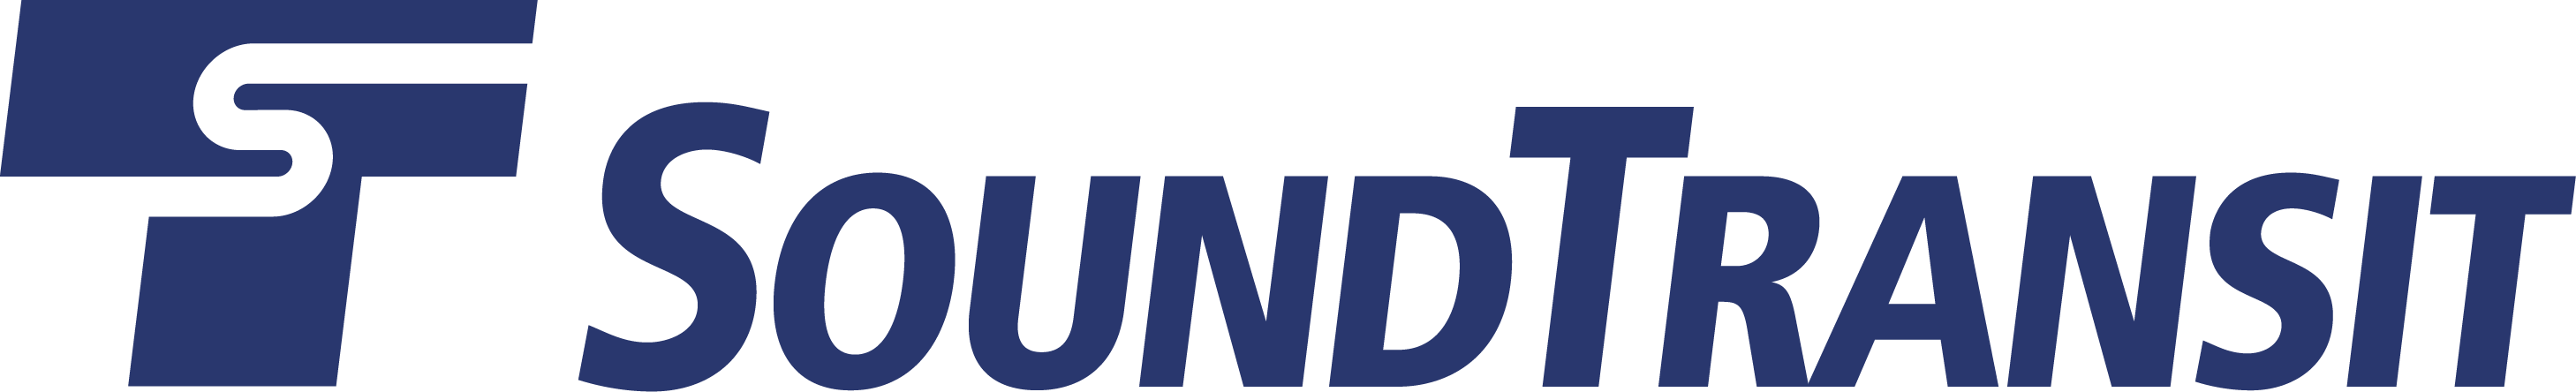 Sound Transit logo in blue